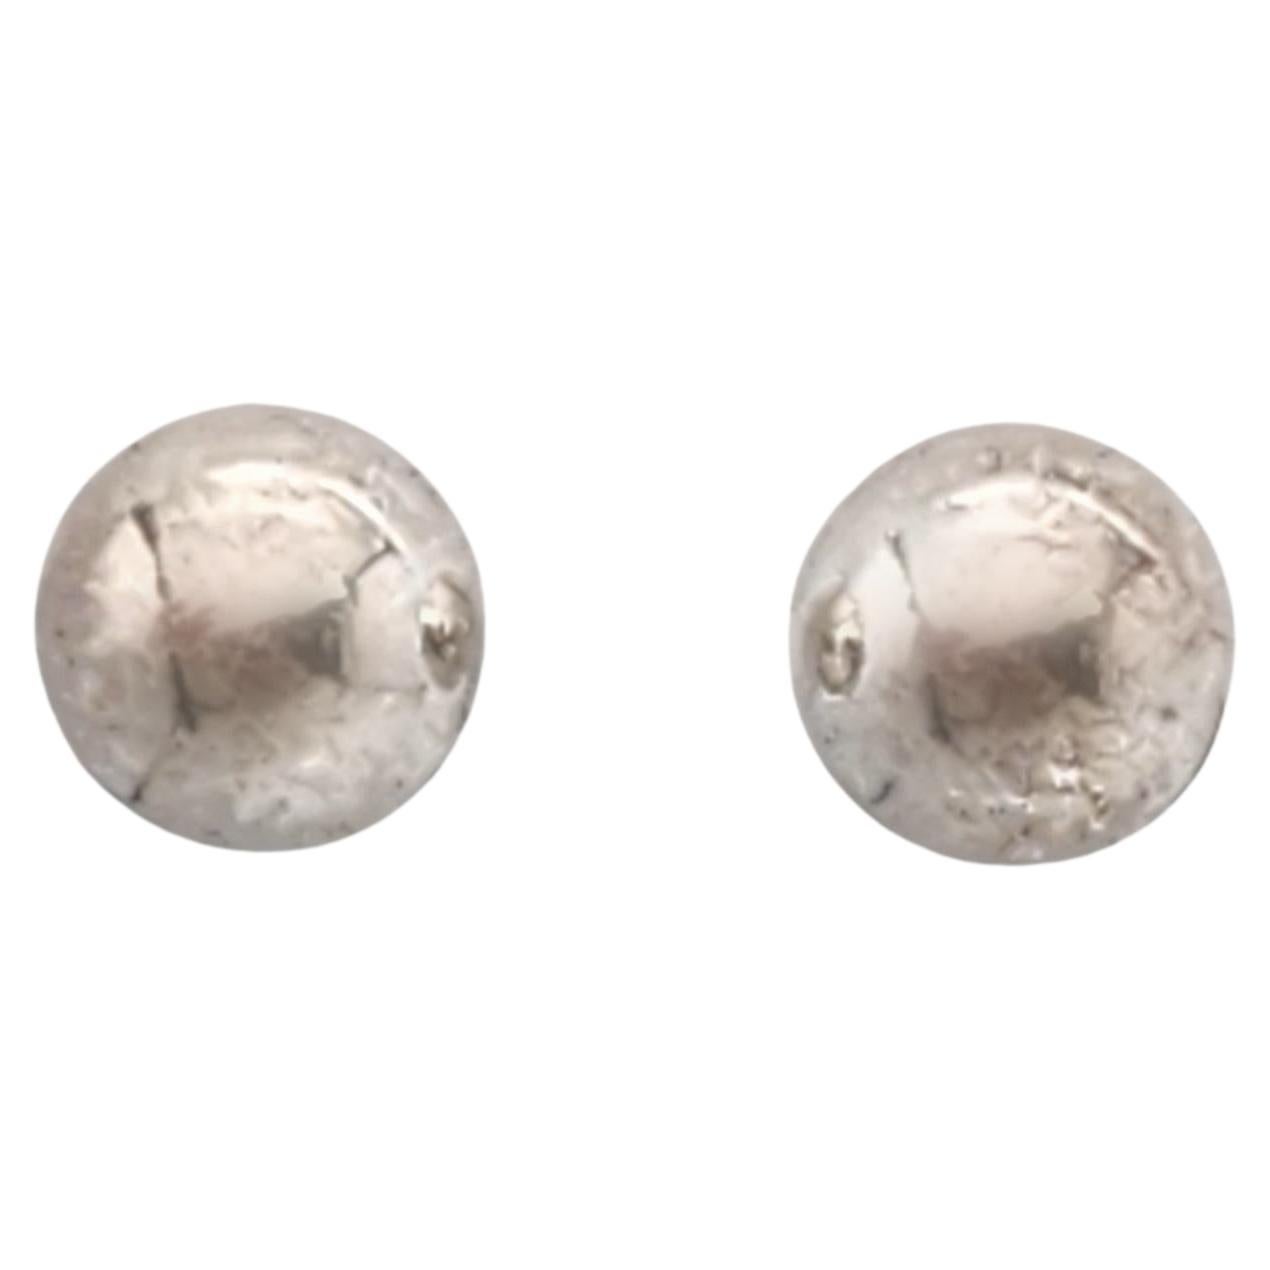 Tiffany & Co Sterling Silver Ball Stud Earrings #16406 For Sale